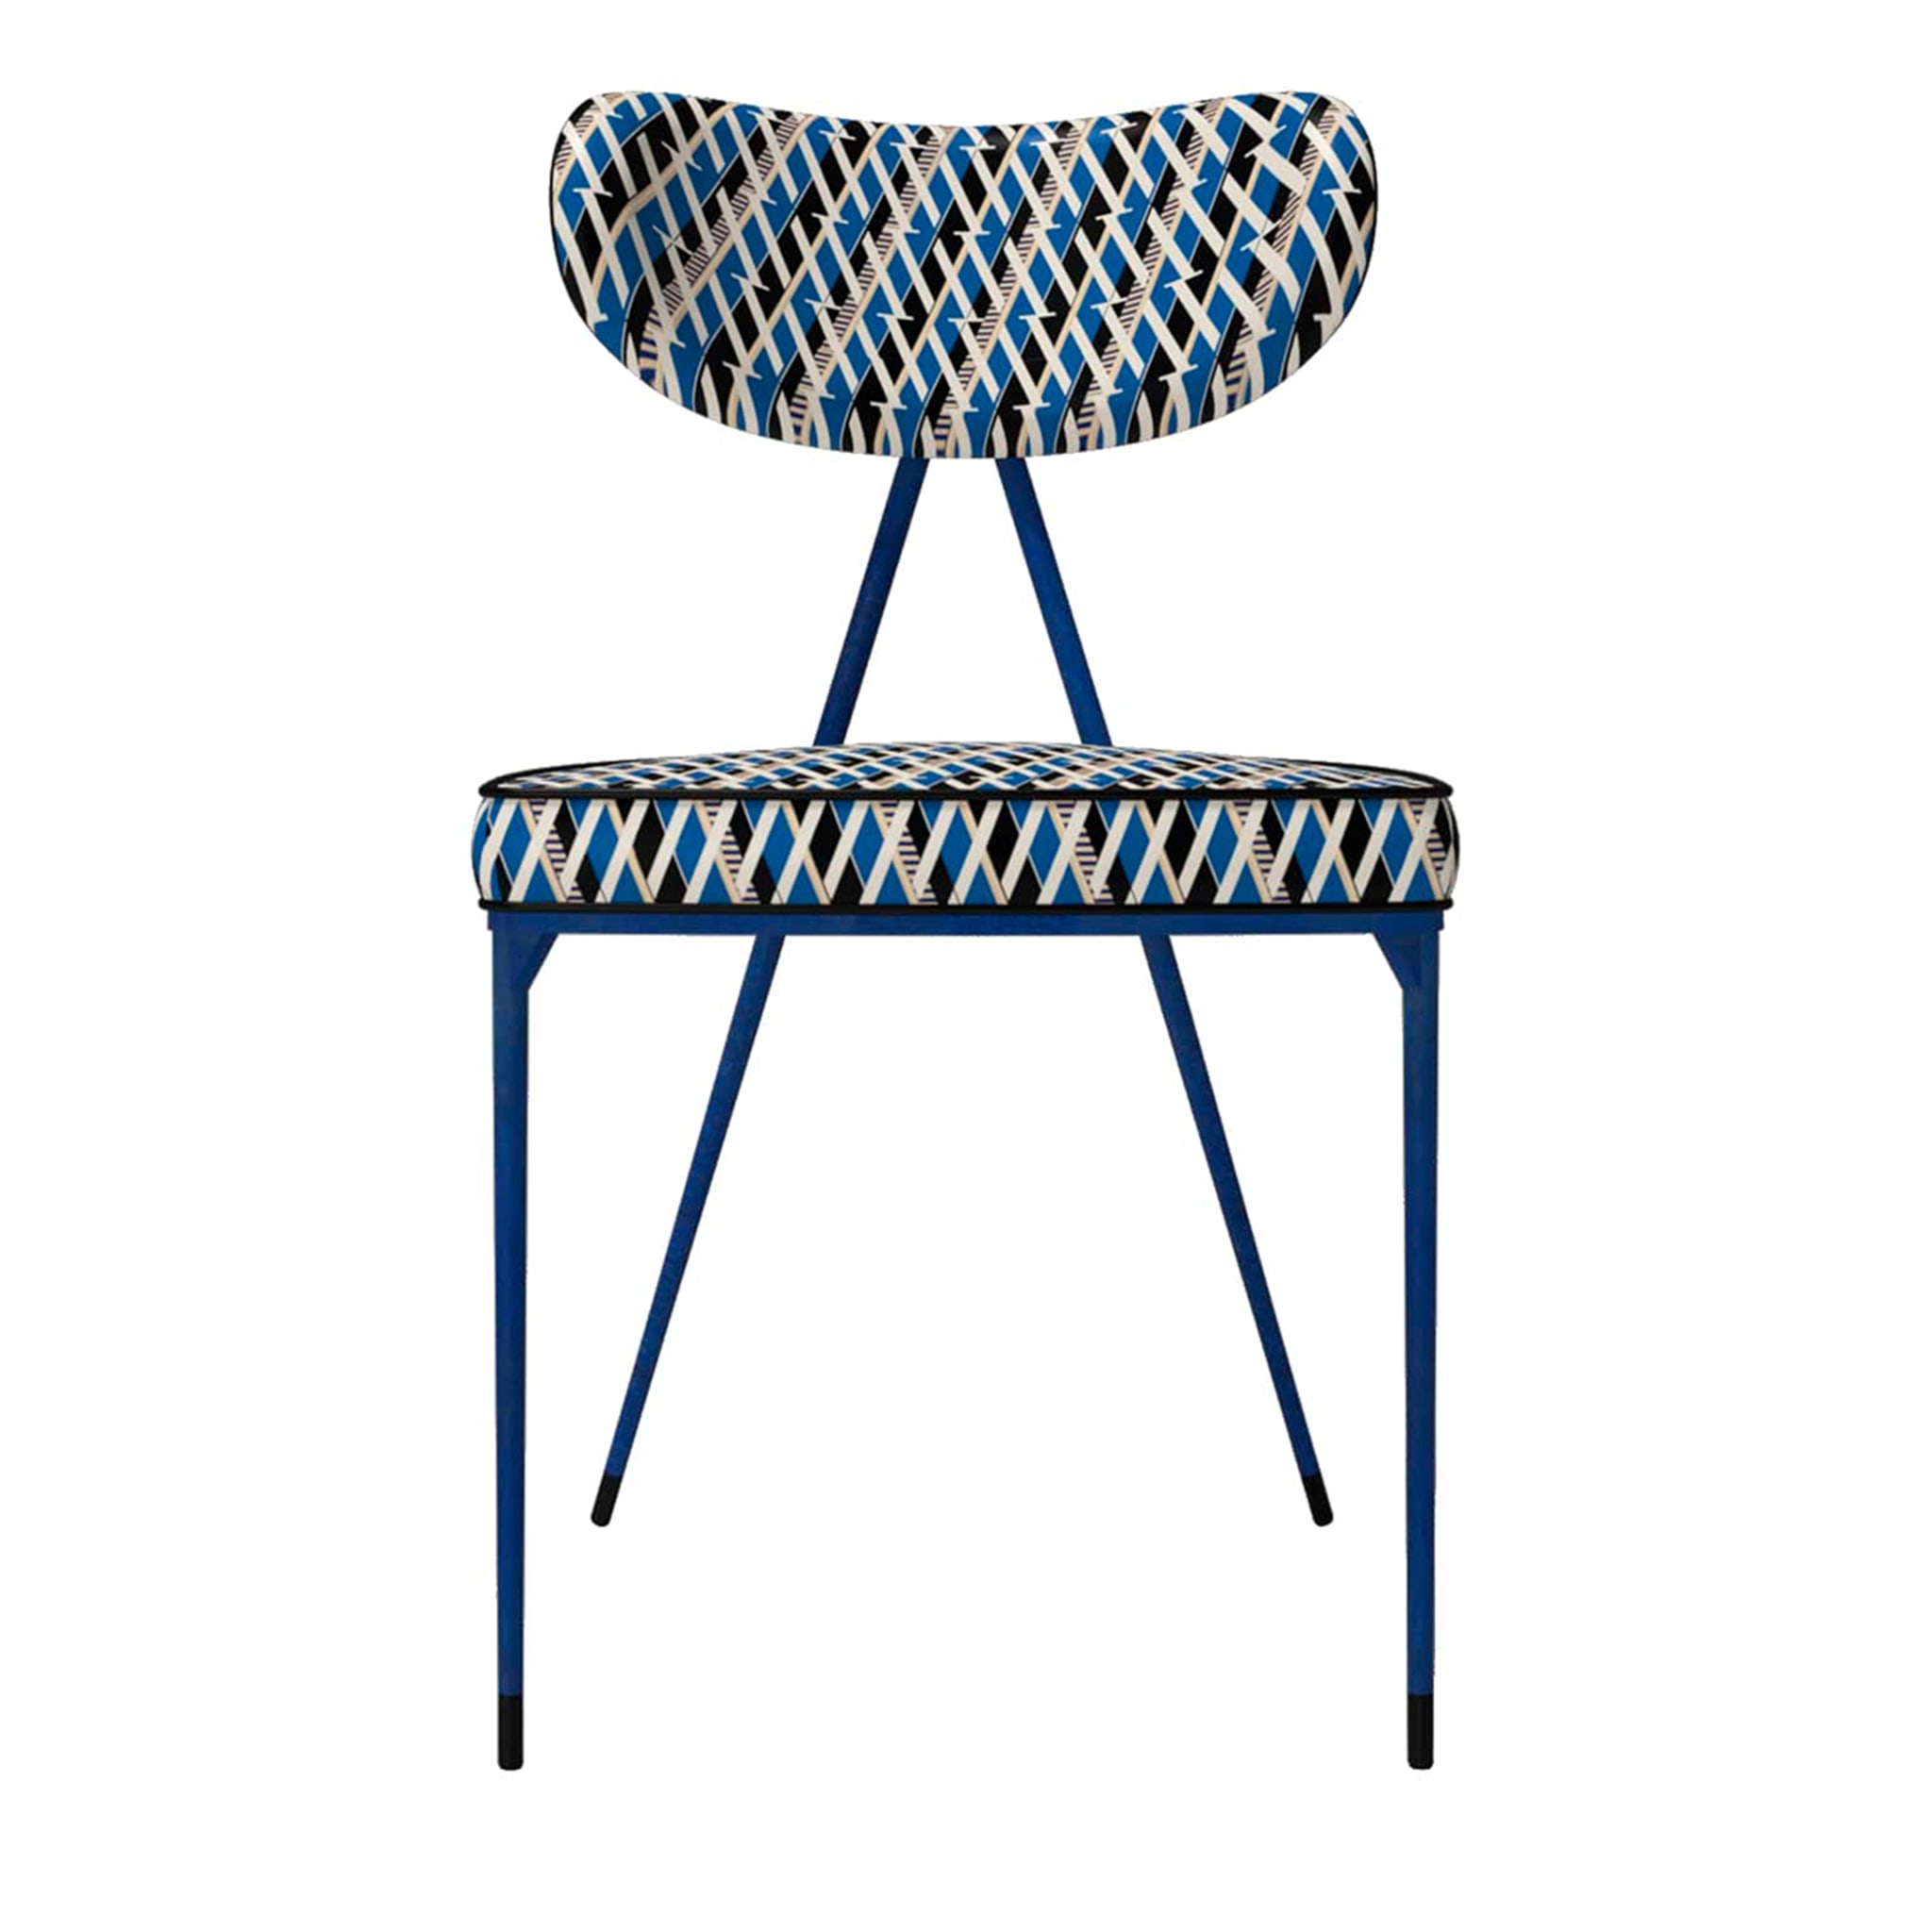 Kleins Blue Chair Objet - Main view